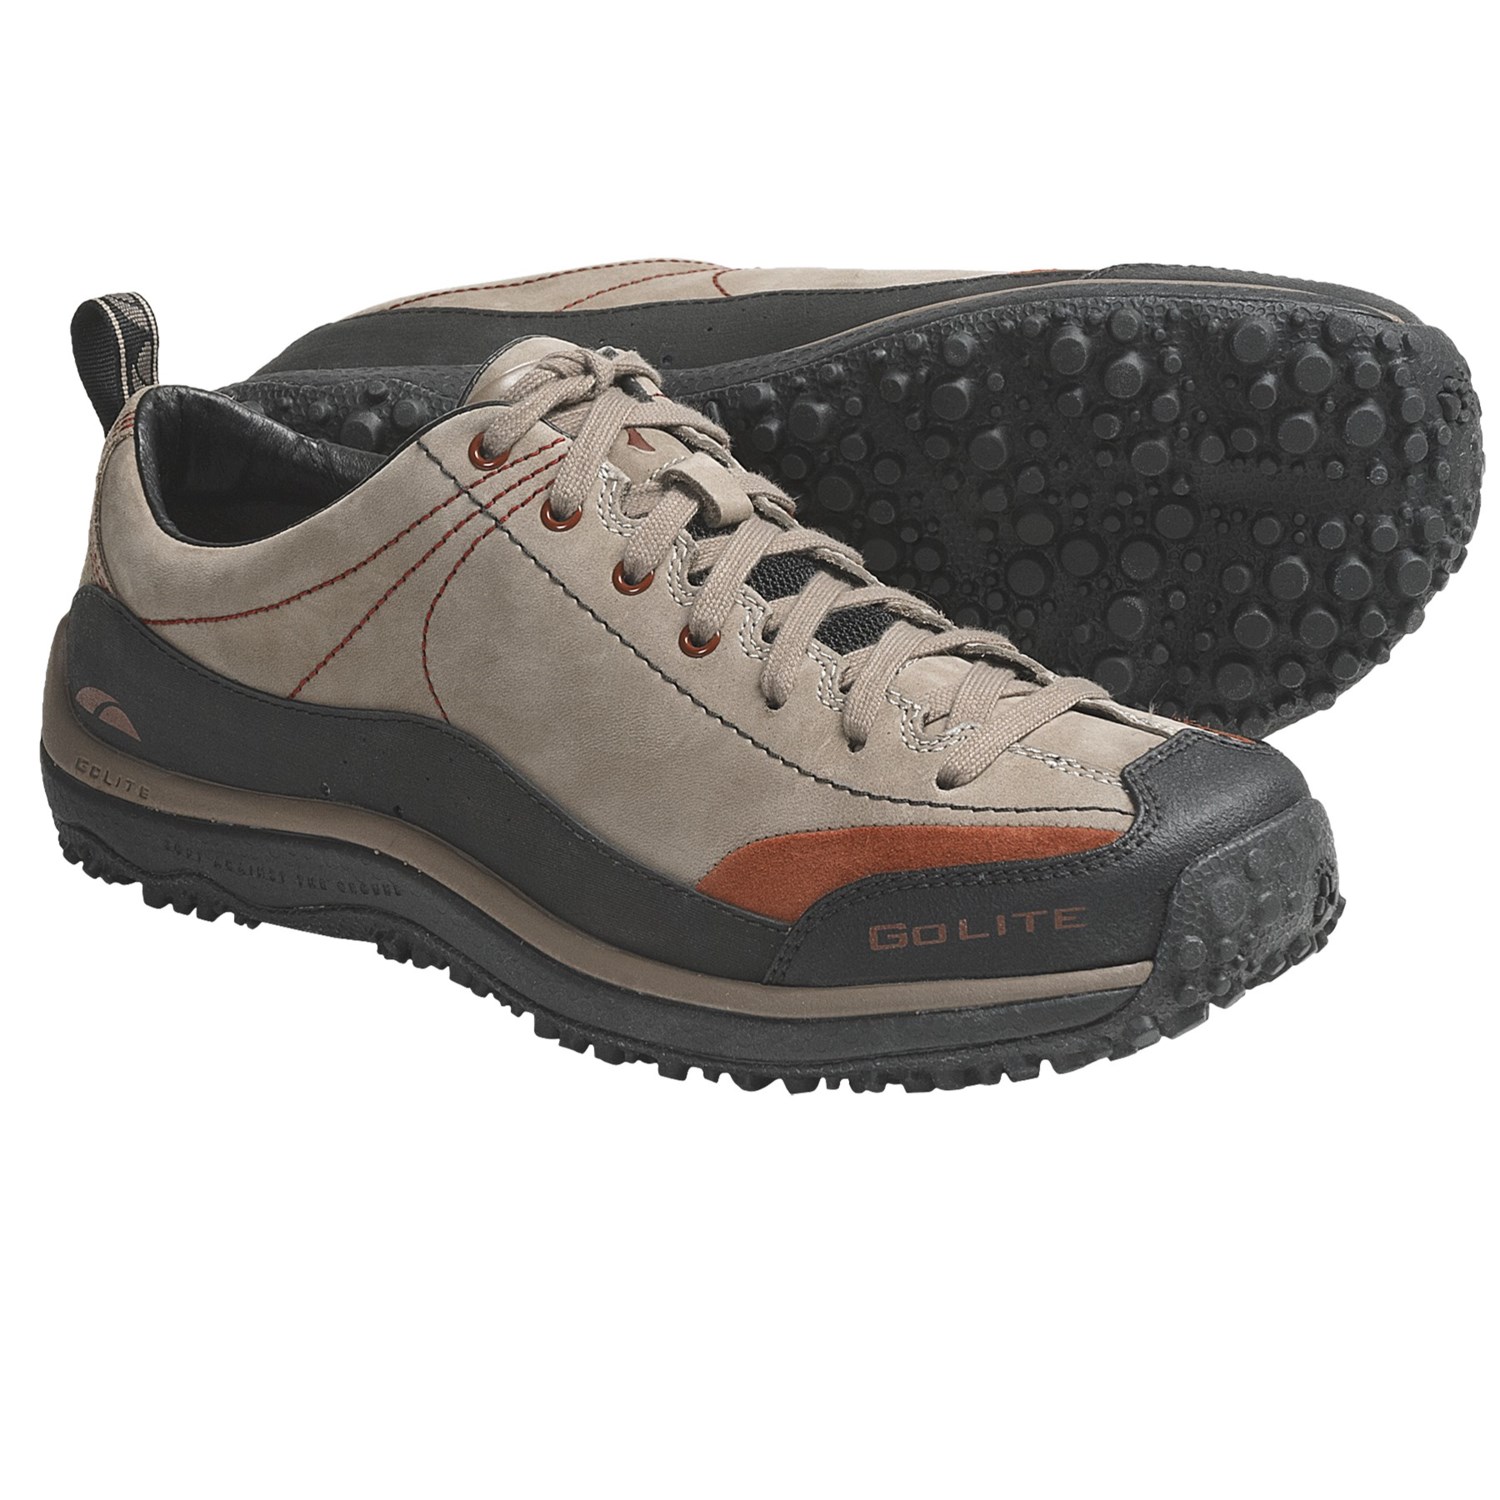 GoLite Scram Lite Shoes (For Men) 5216W - Save 45%